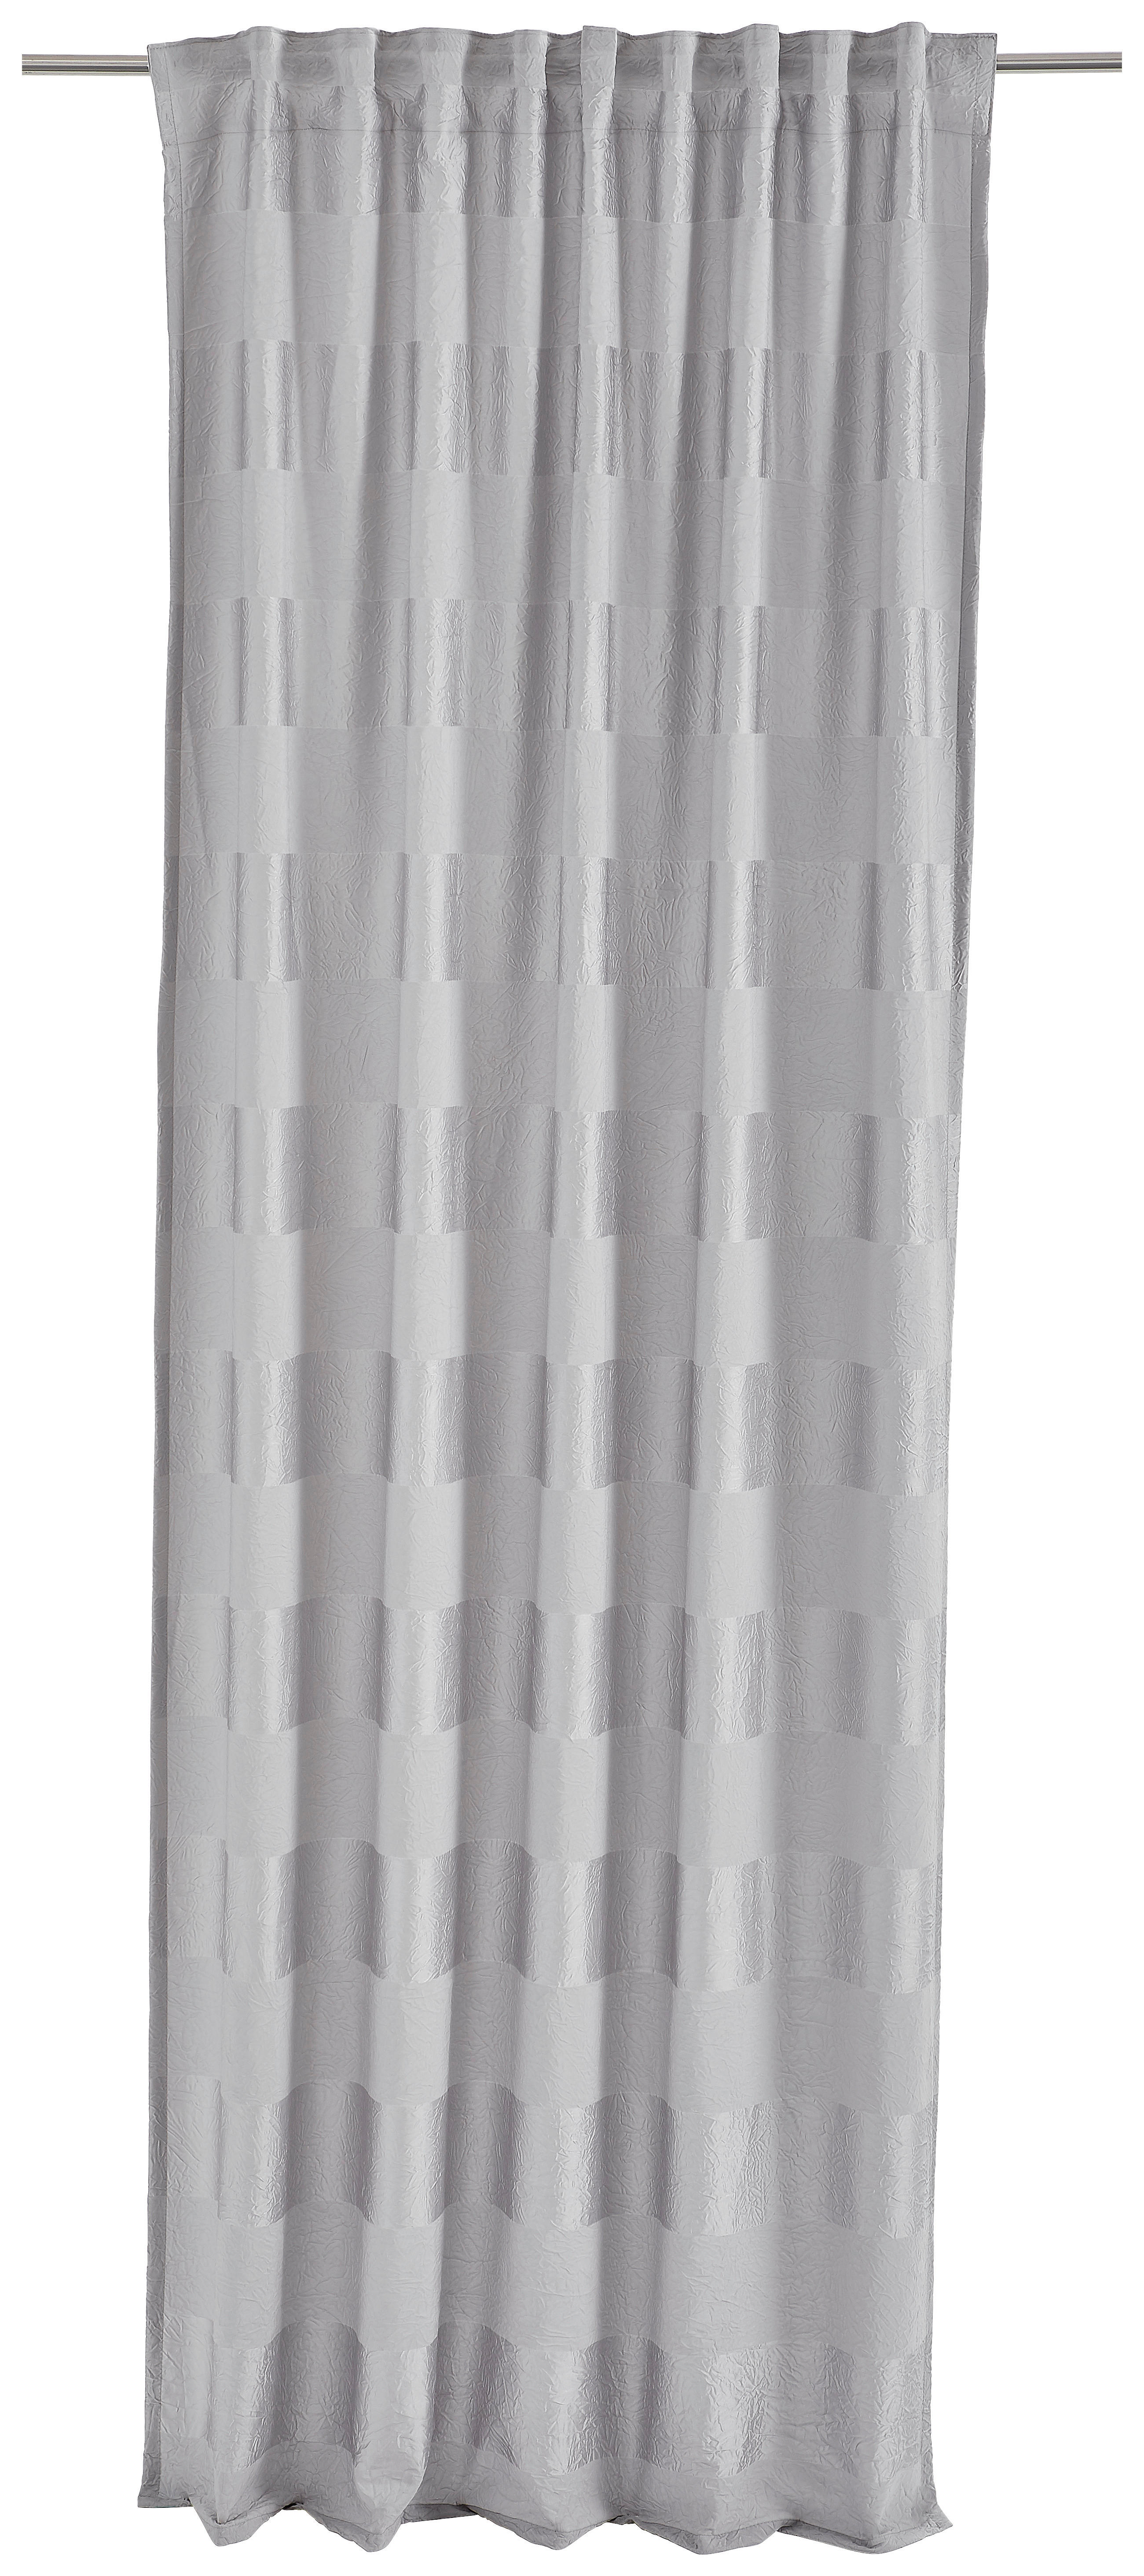 GARDINLÄNGD ej transparent  - silver, Basics, textil (135/245cm) - Esposa